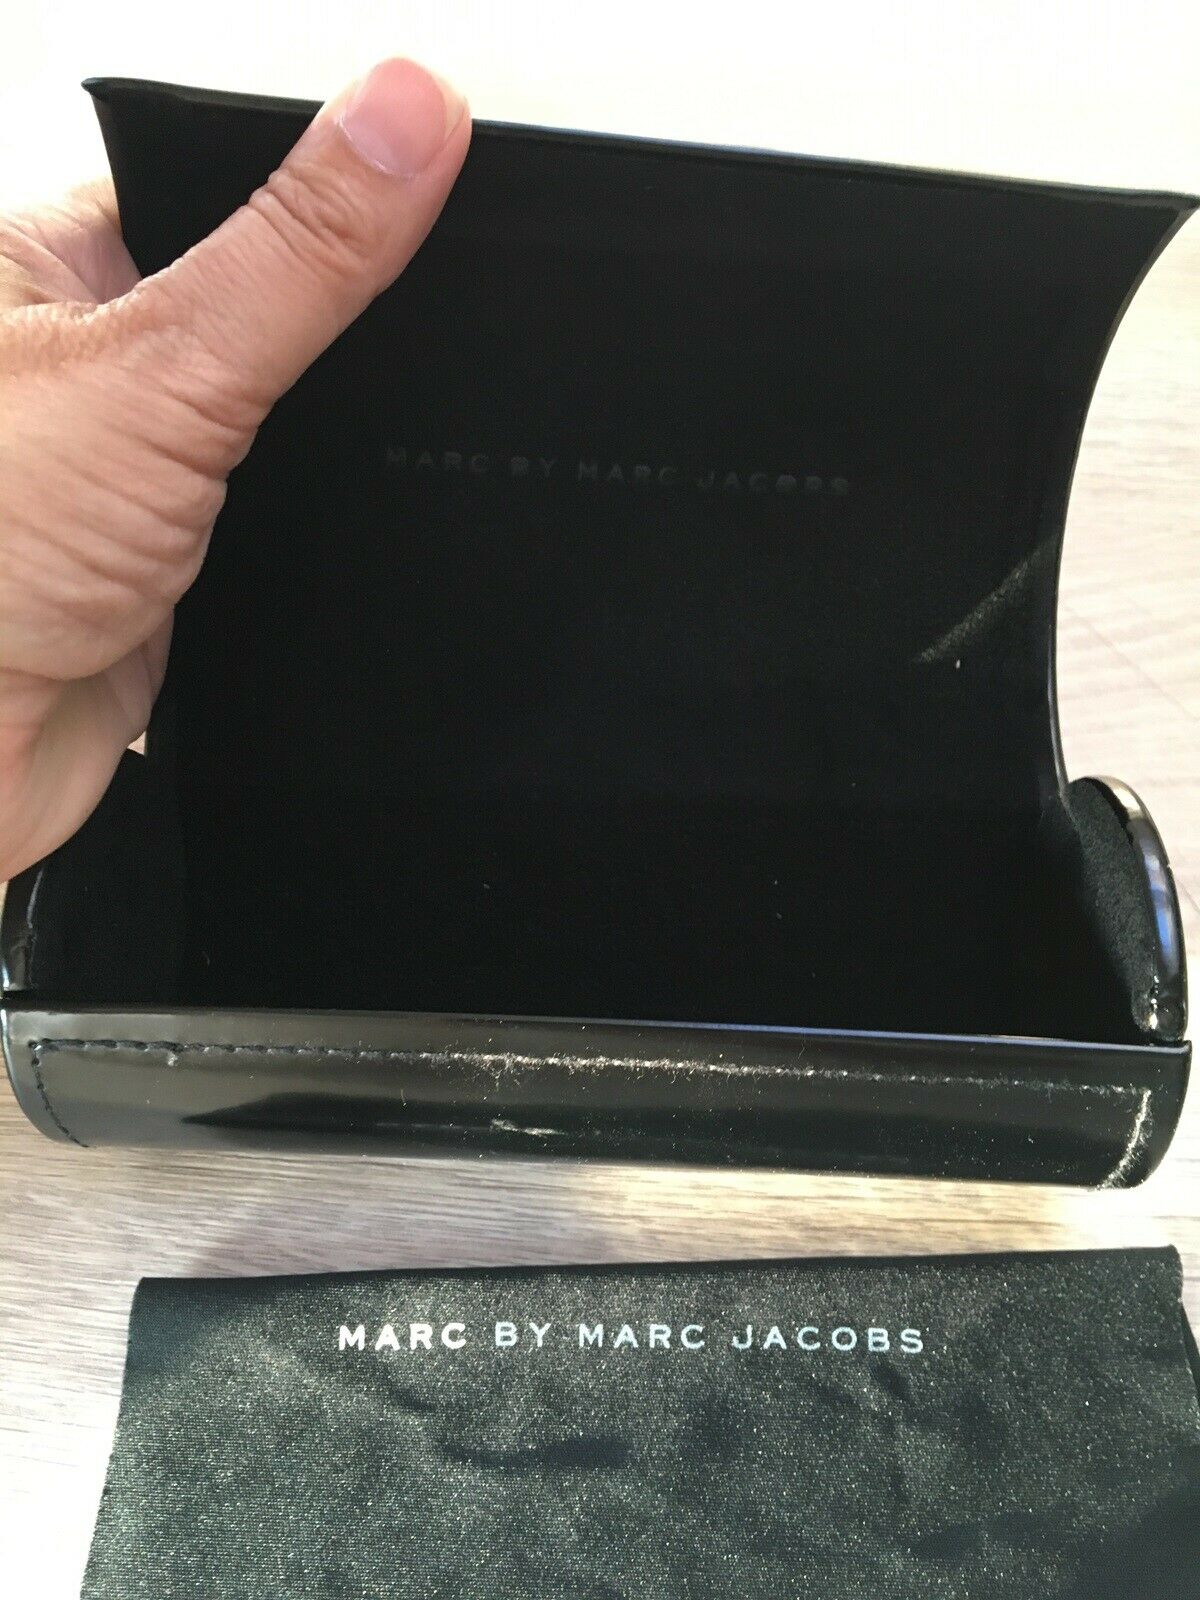 Andre solbriller, Marc Jacobs brille itui